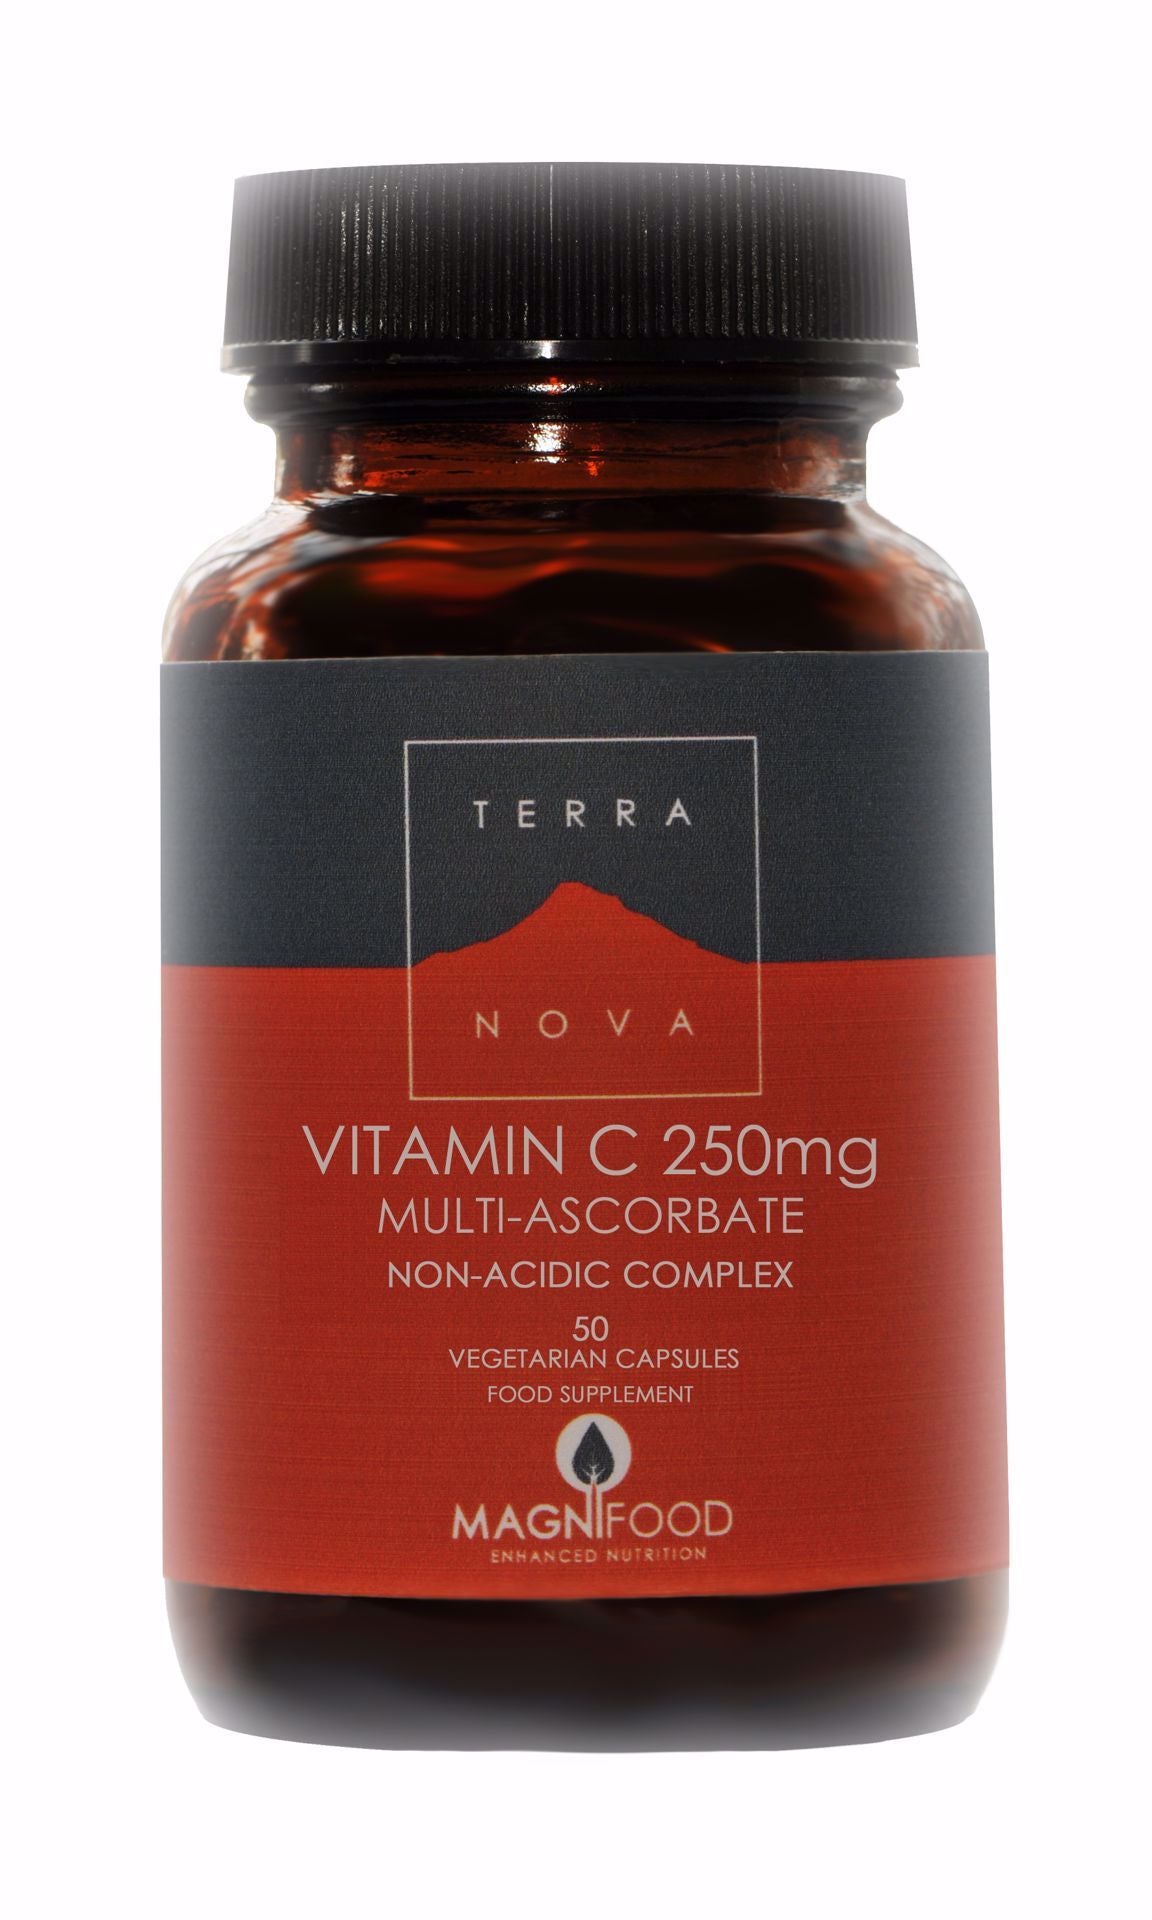 Terra Nova Vitamin C 250mg (multi ascorbate complex) 50 vegetarian capsules